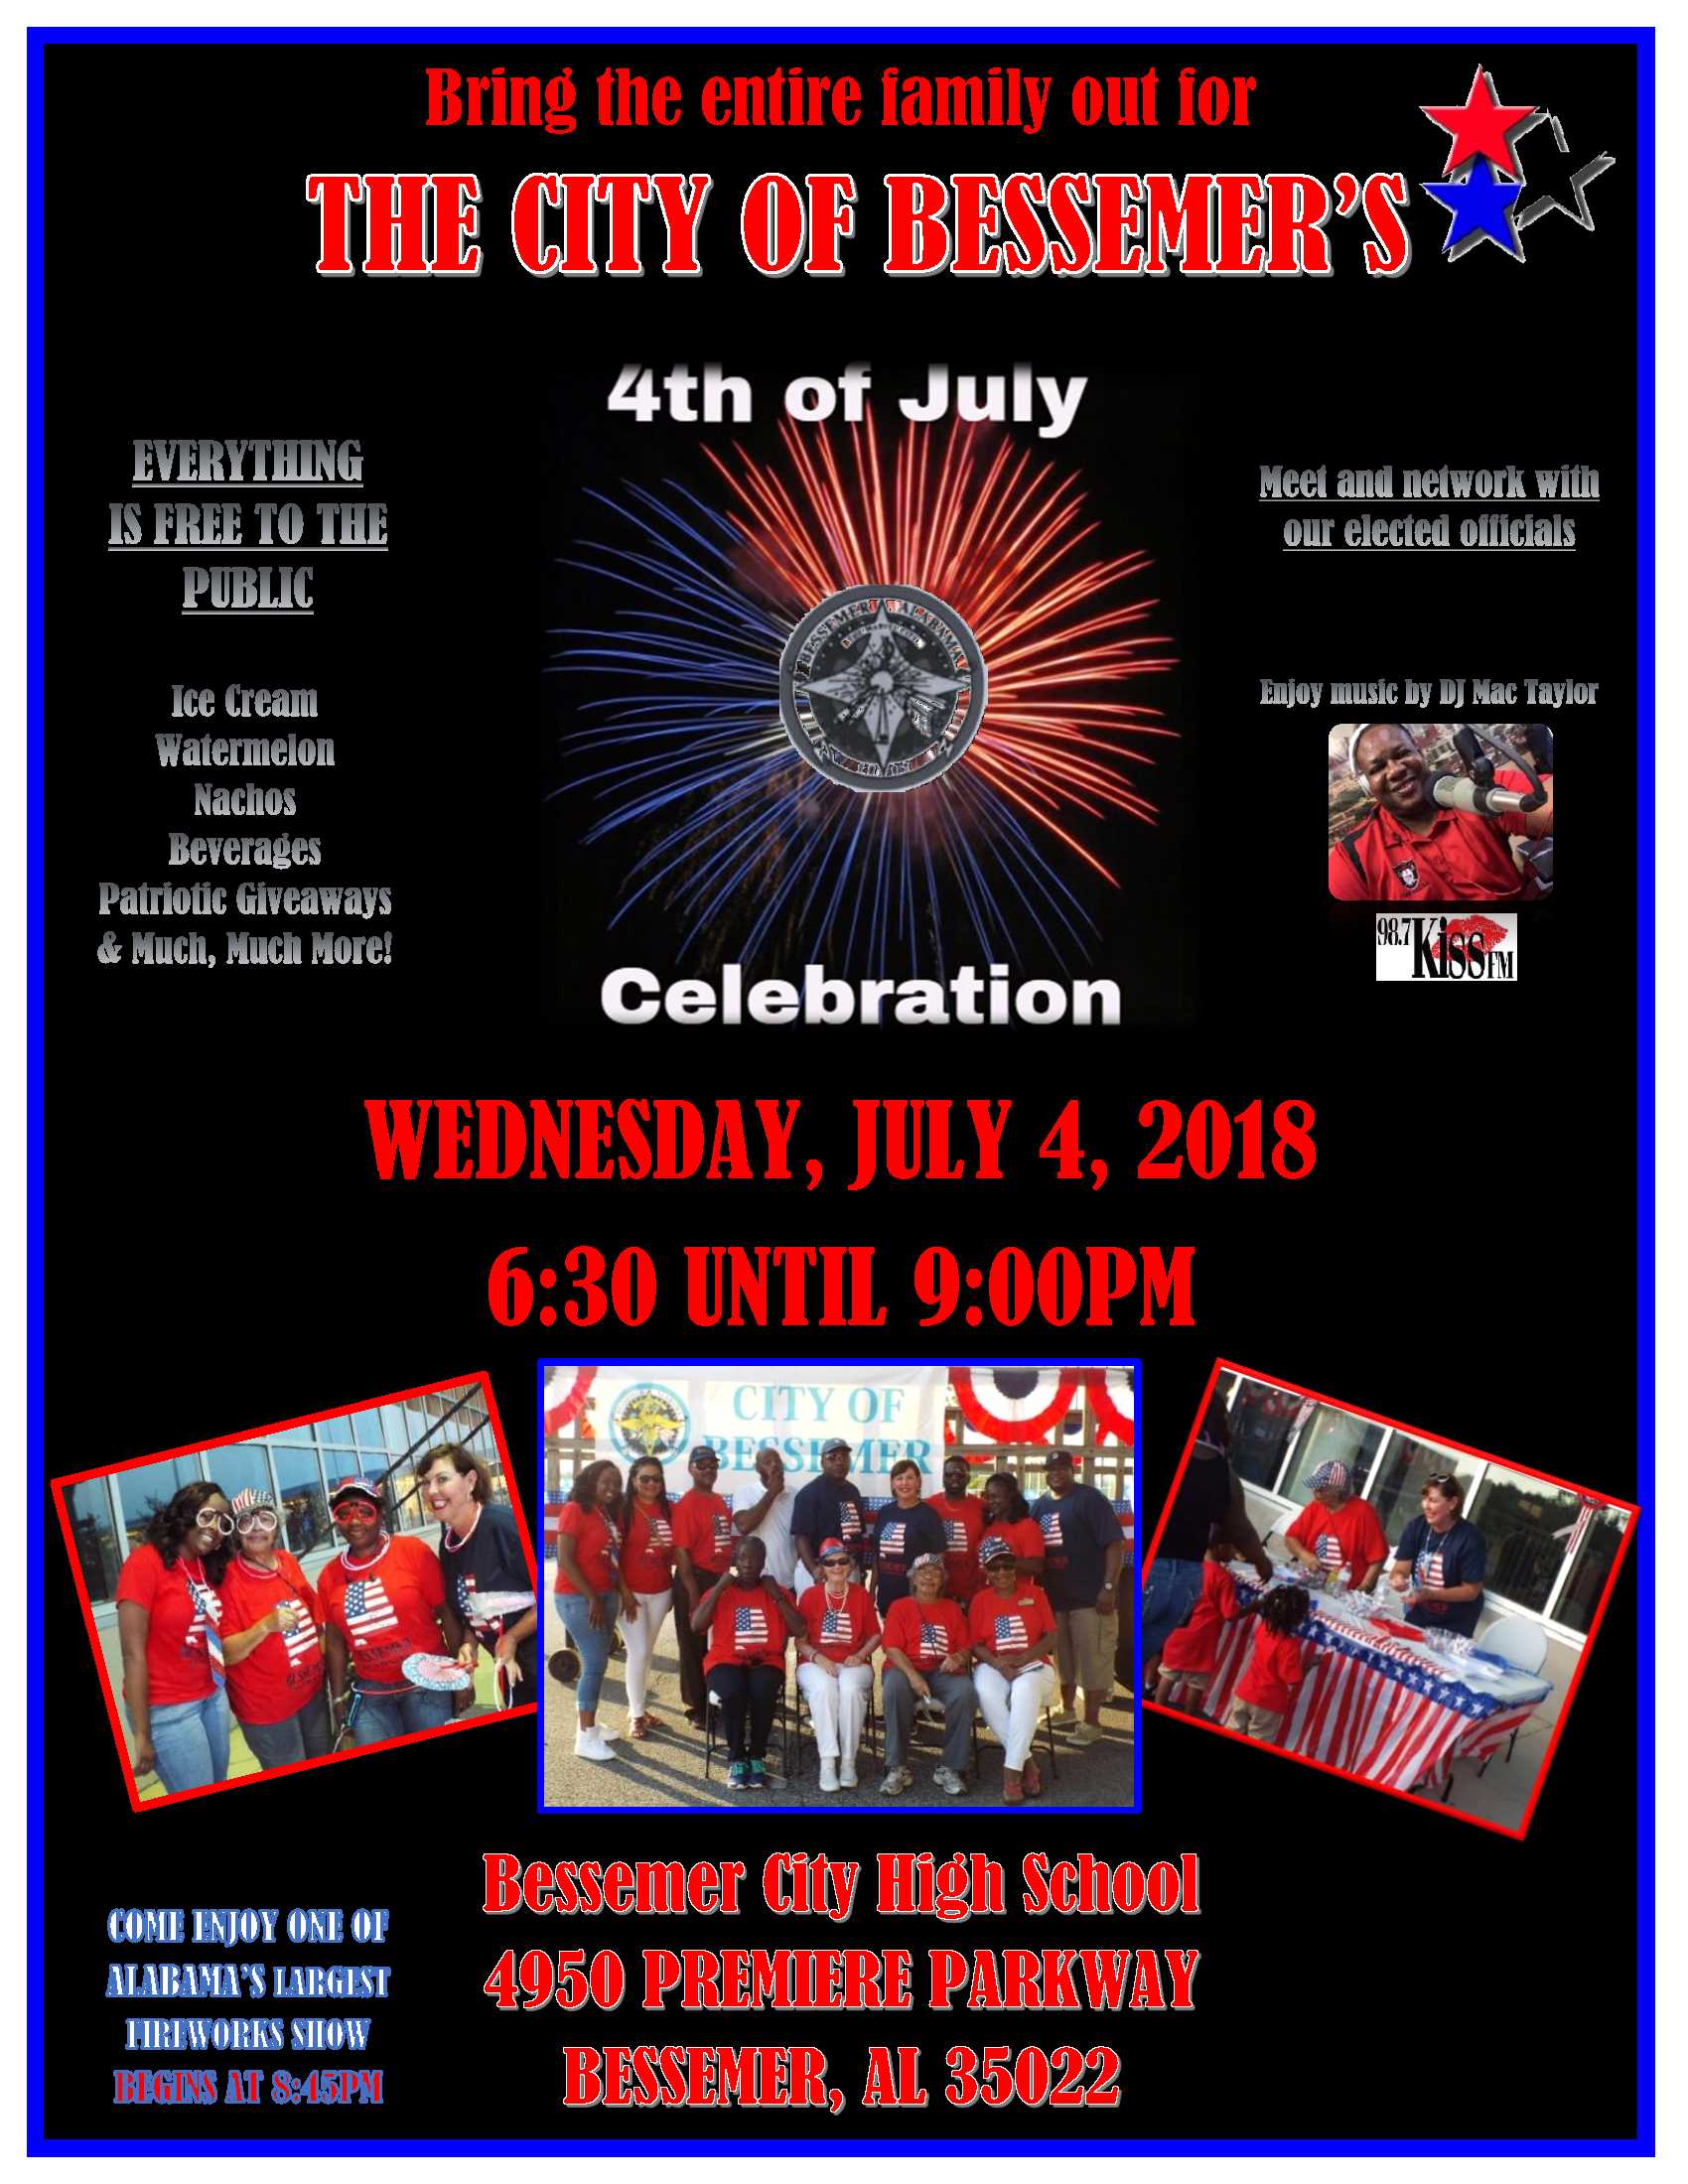 City of Bessemer's 4th of July Celebration